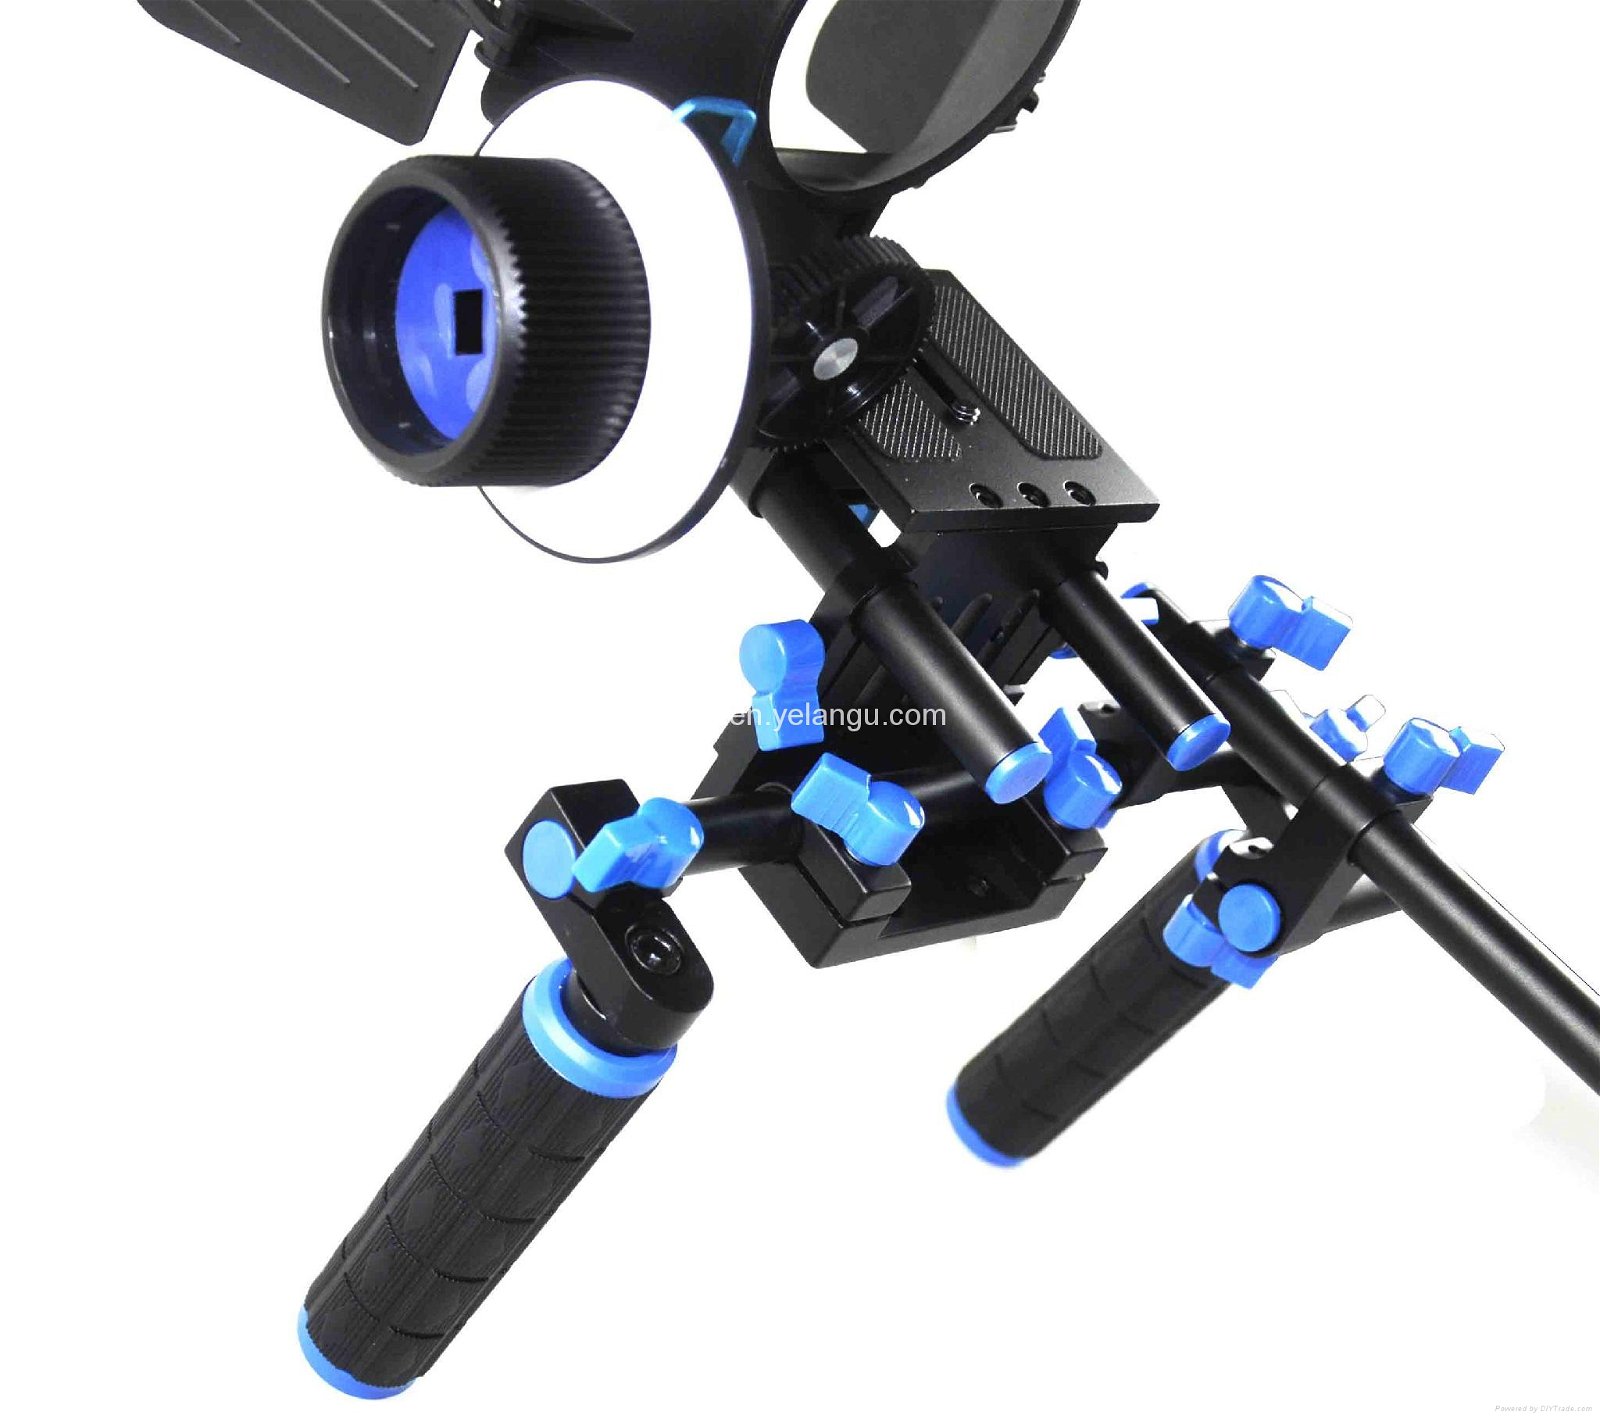 Professional Photographic Mult-function DSLR And Video Camera Shoulder Rig Mount 4